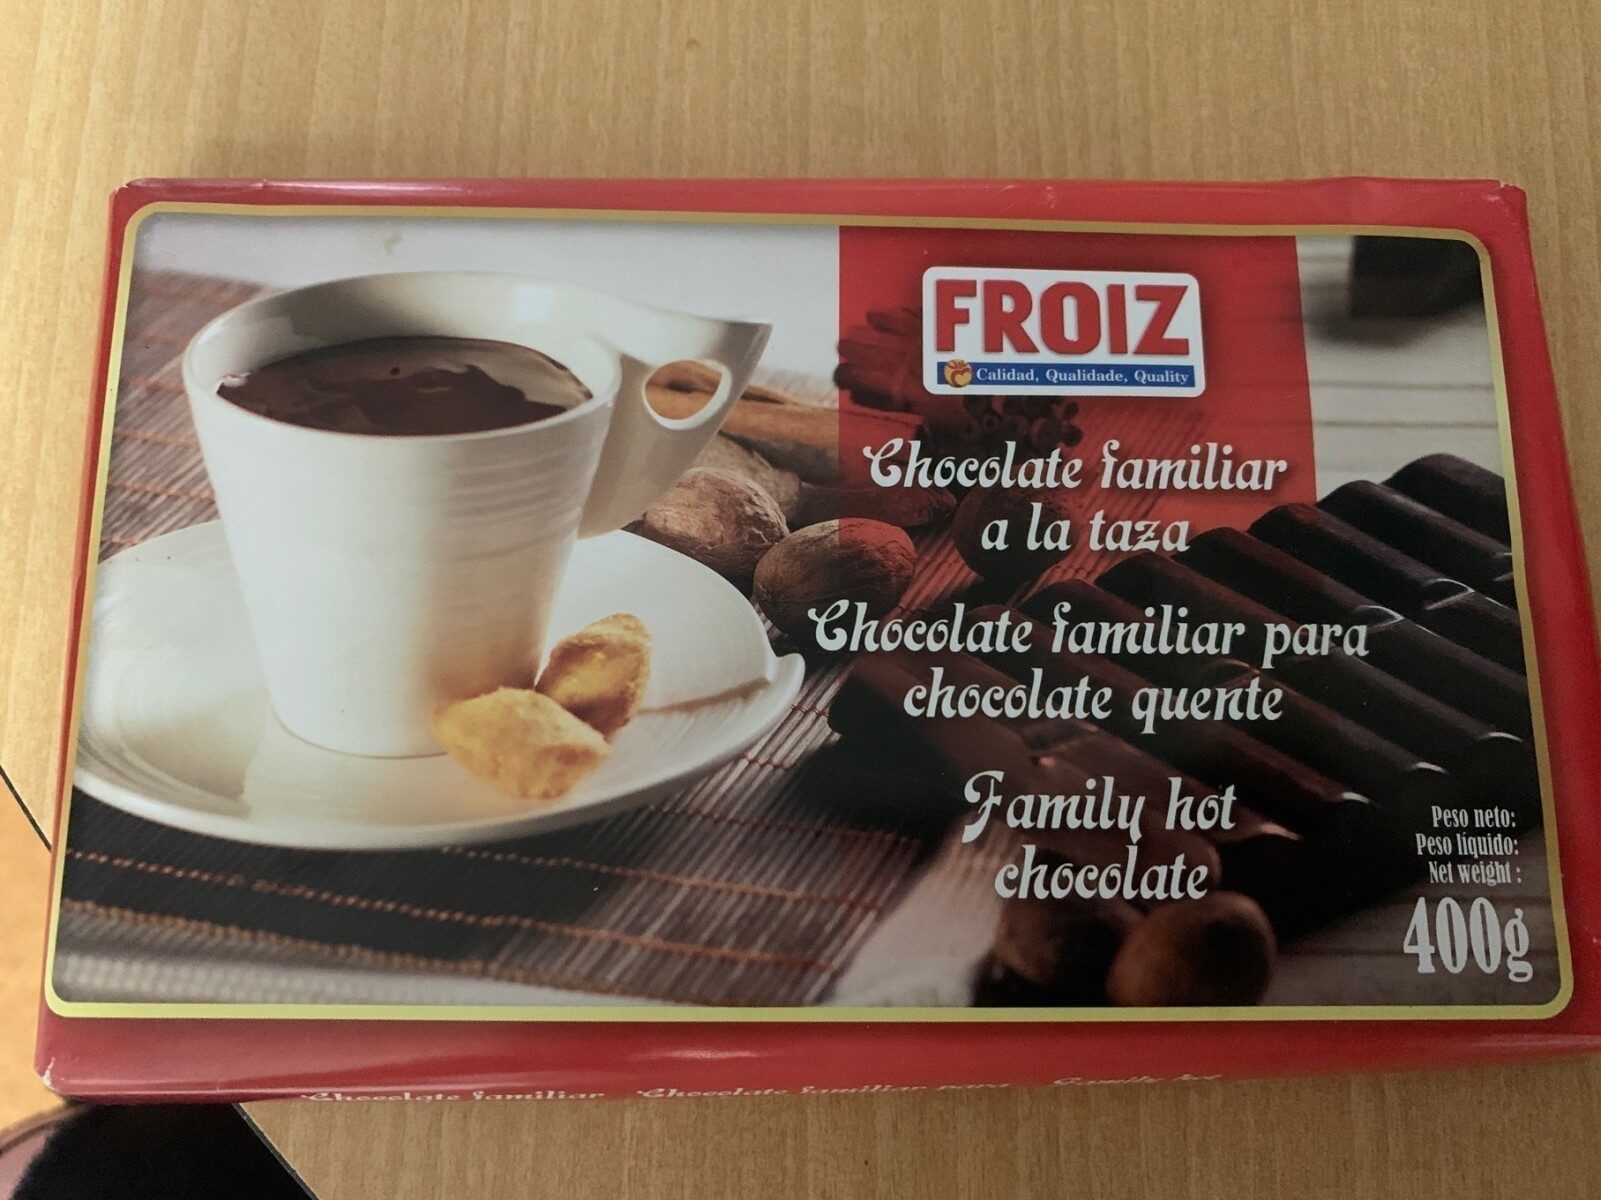 Chocolate familiar a la taza - Producte - es